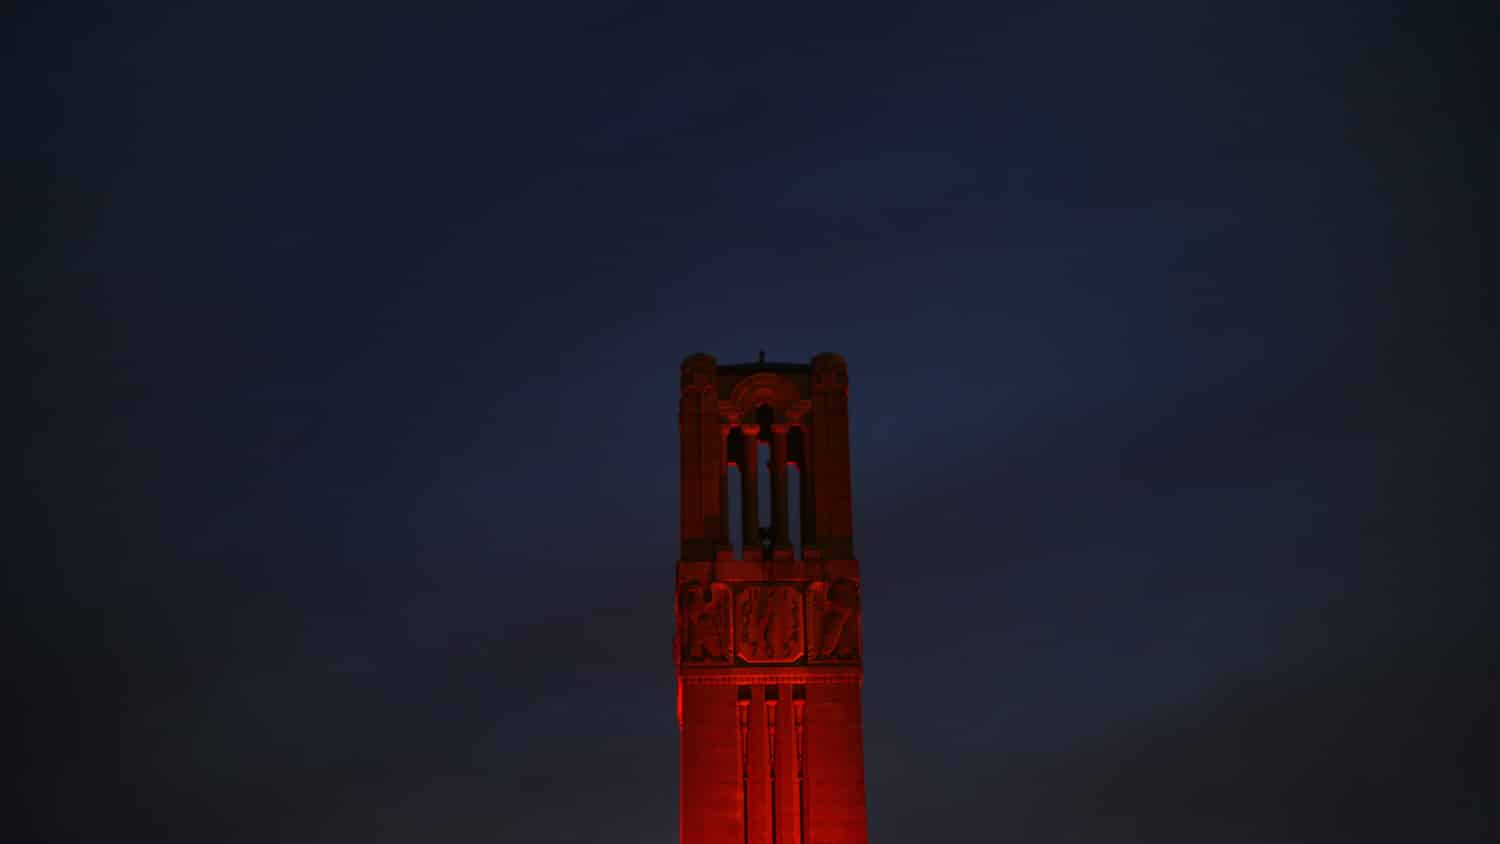 Belltower lit red against a night sky